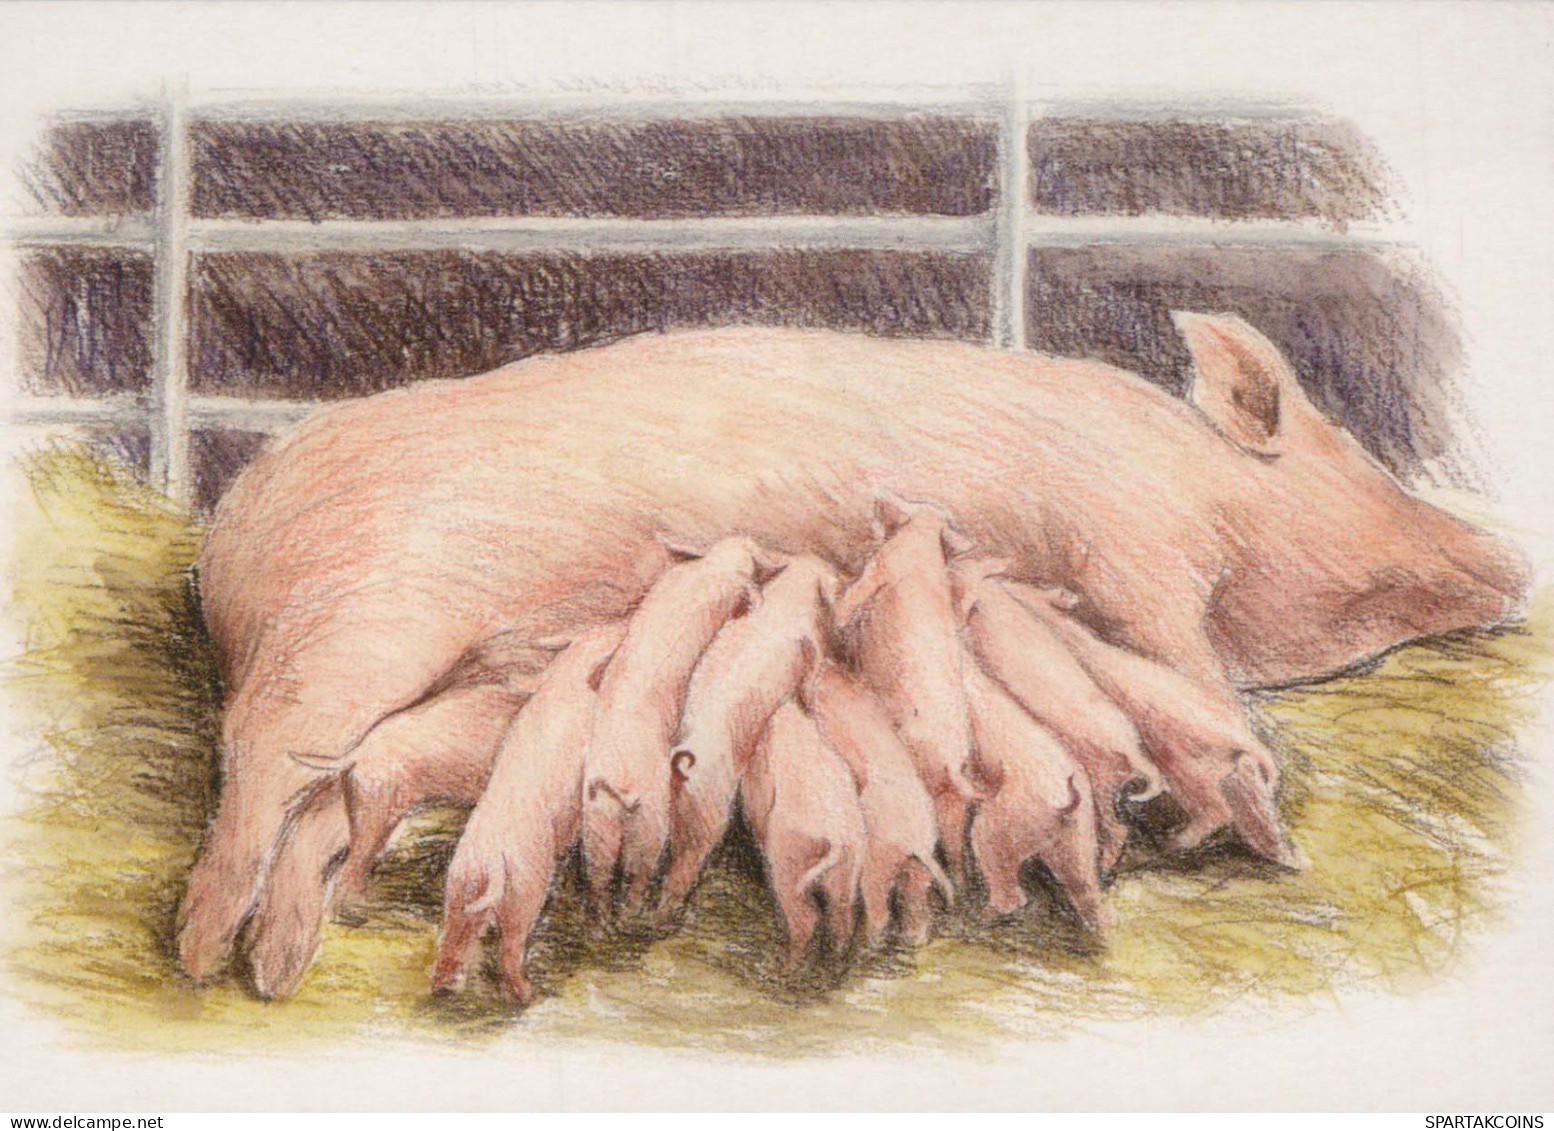 PIGS Animals Vintage Postcard CPSM #PBR759.A - Cerdos